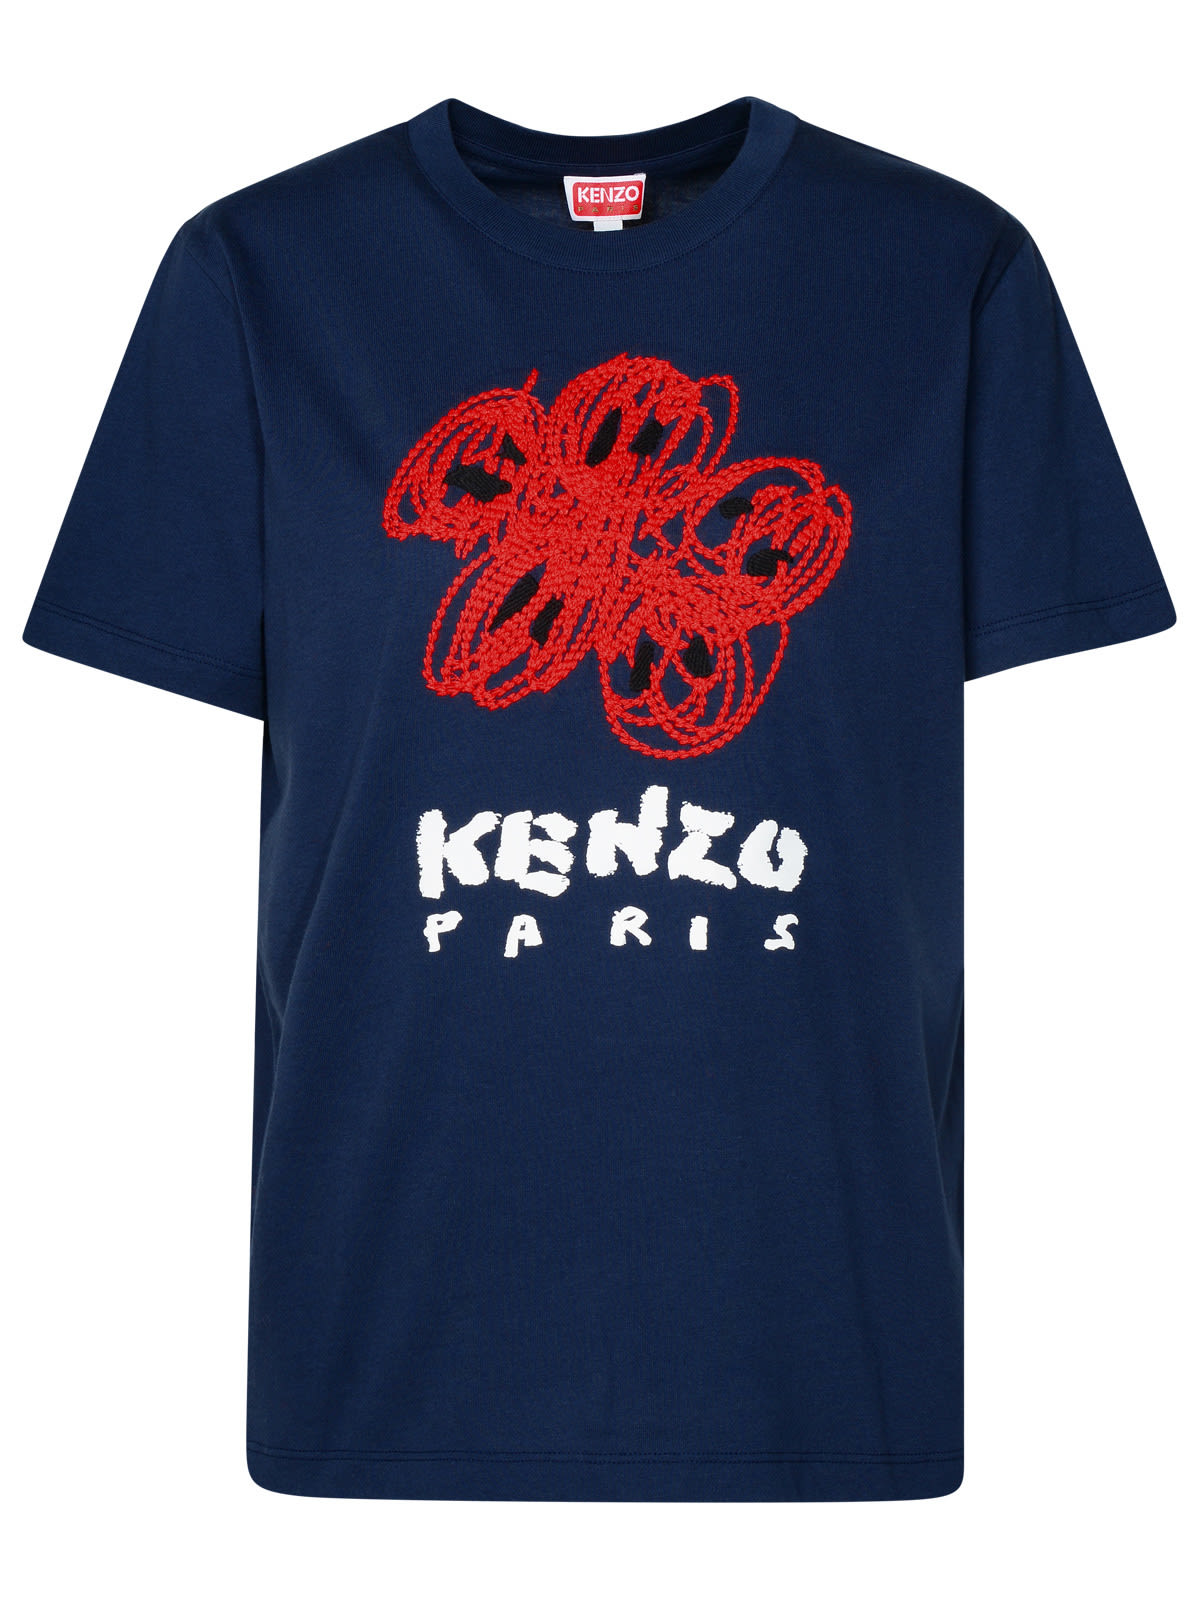 Shop Kenzo Blue Cotton T-shirt